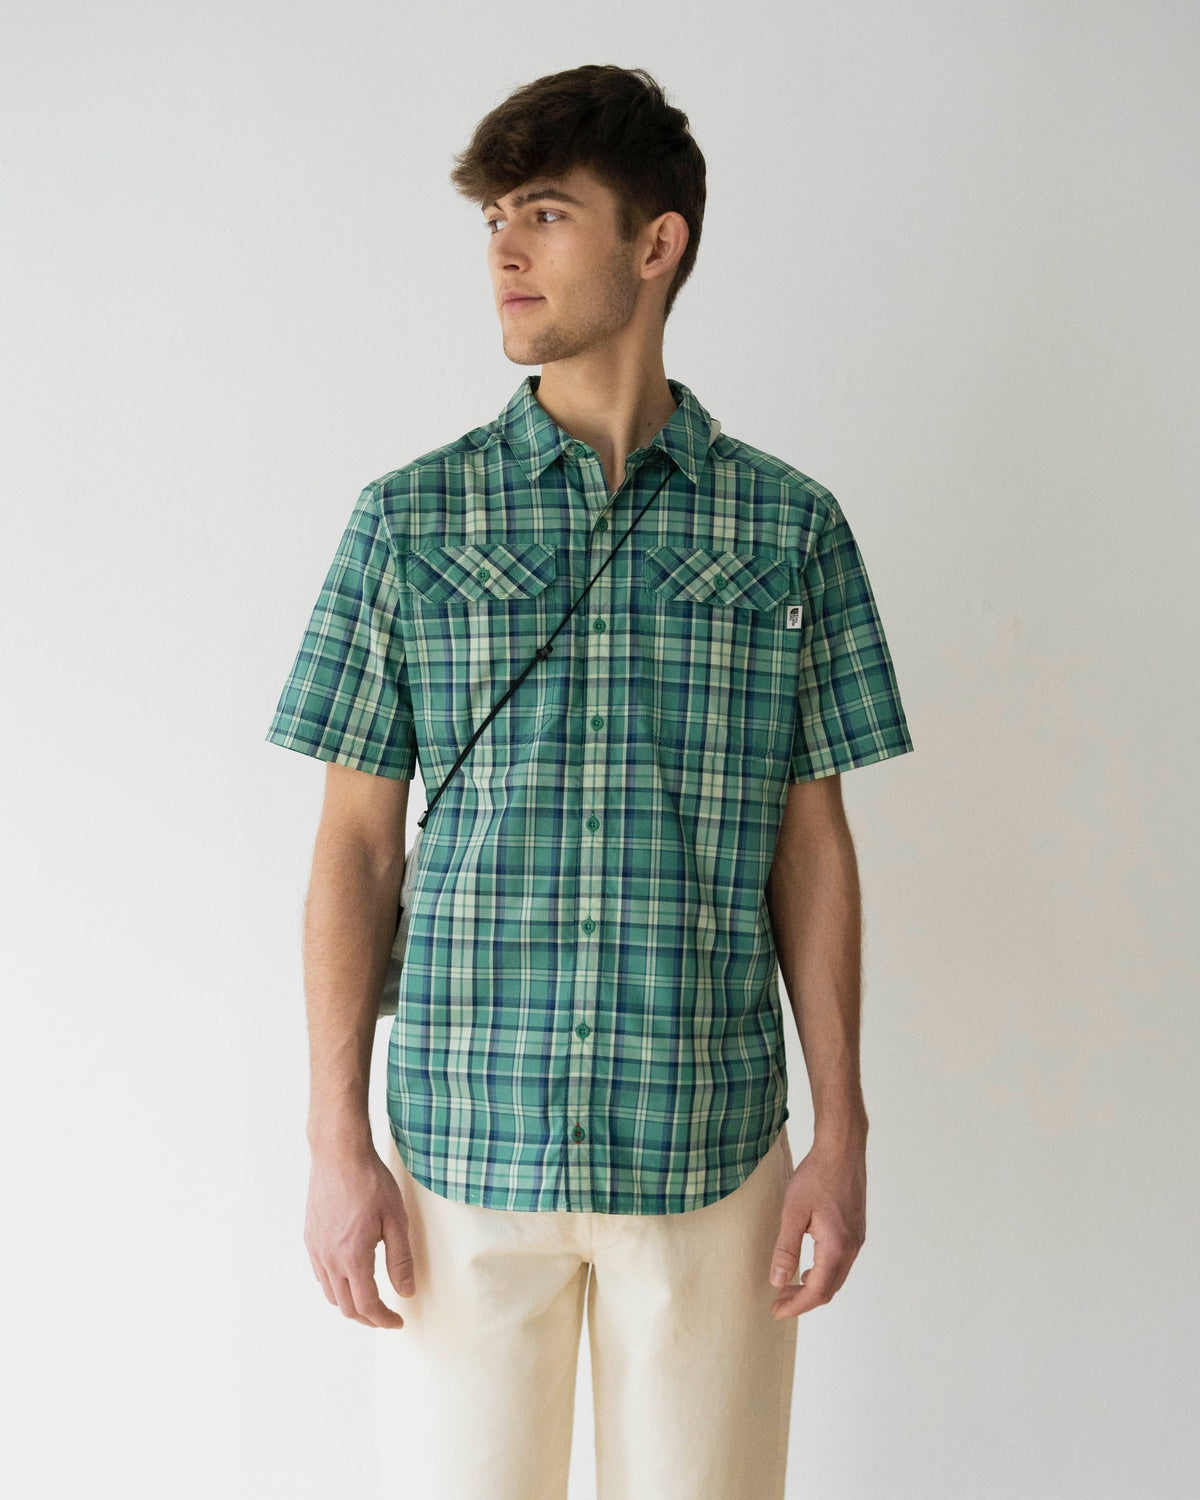 M S/S Pine Knot Shirt - Gemstone Green Plaid